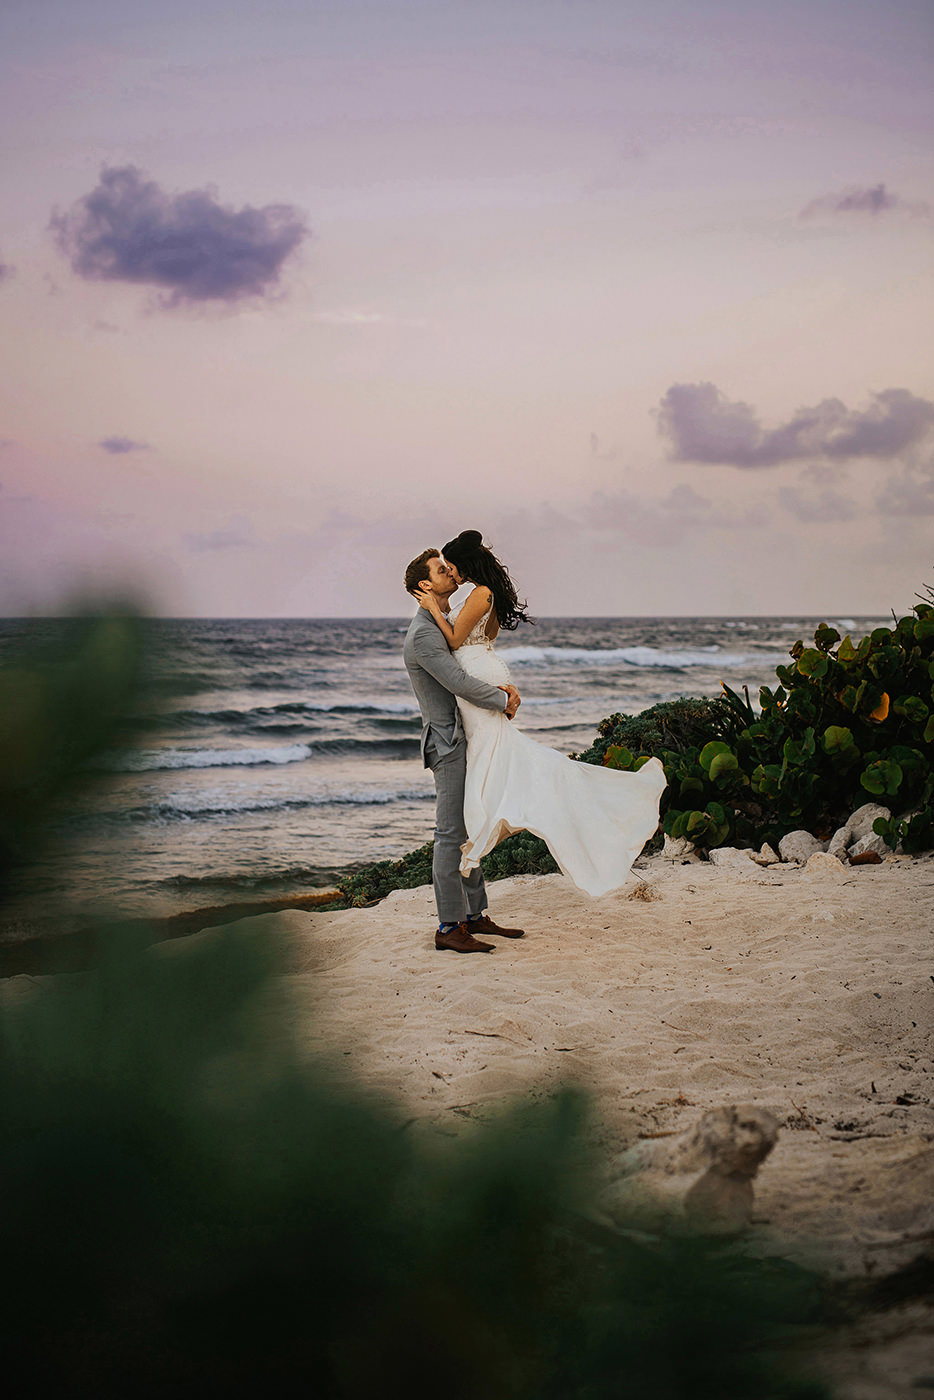 Wedding Photo oceanside in Tulum